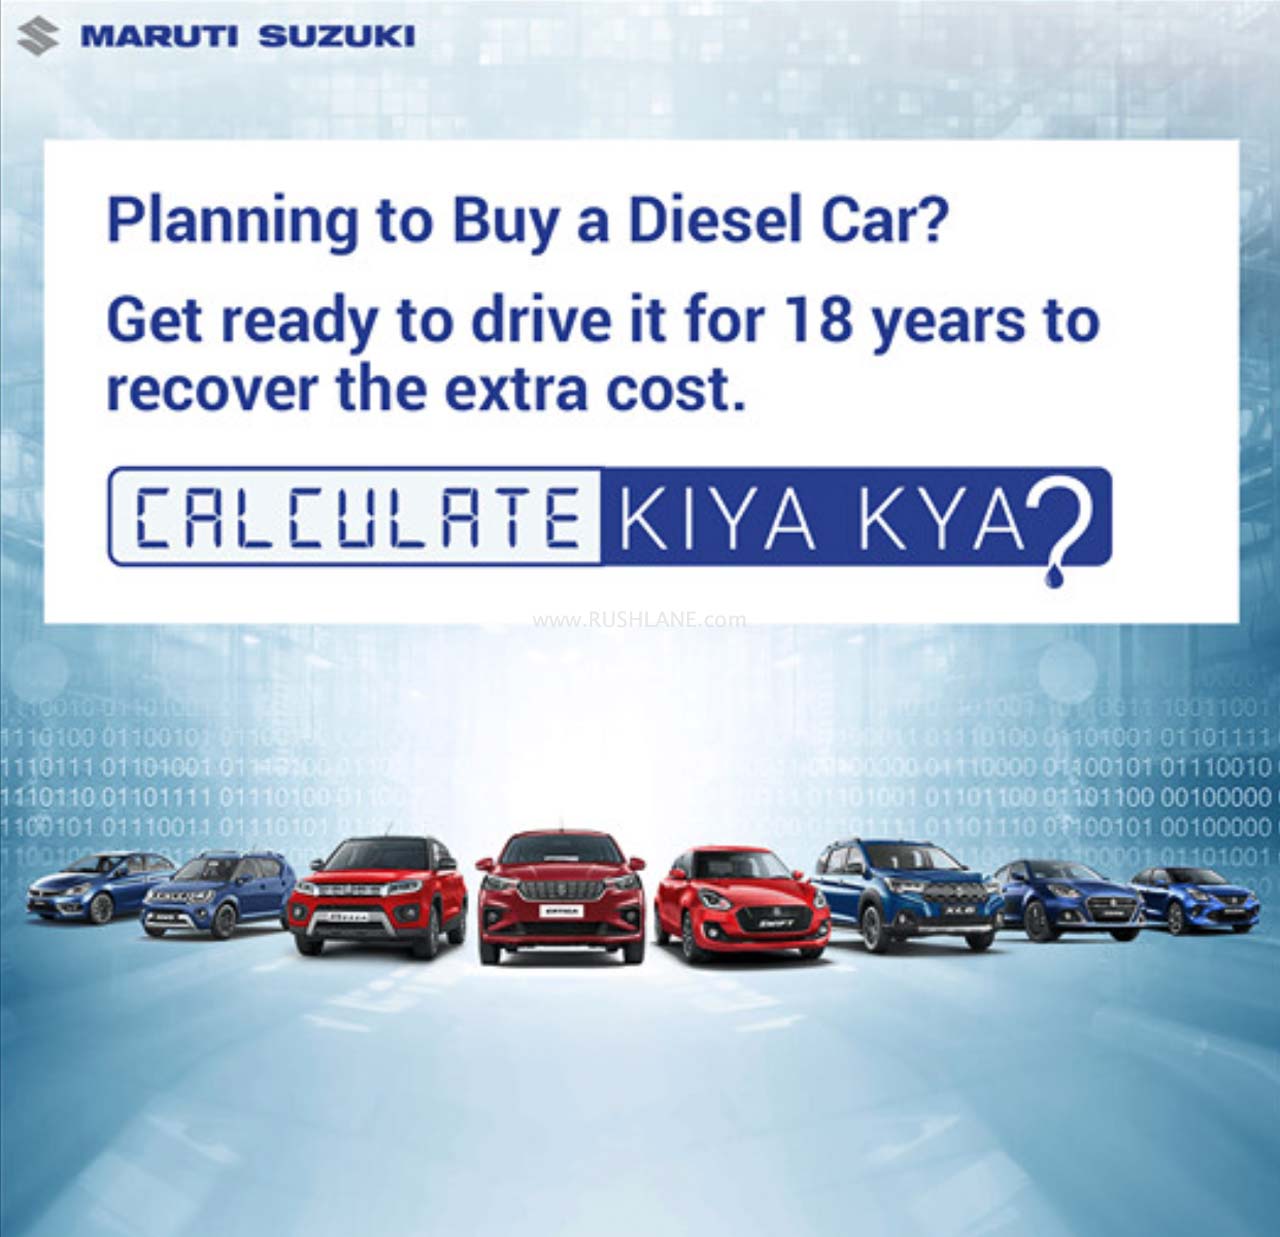 Maruti launches petrol vs diesel car cost calculator - Promotes petrol car